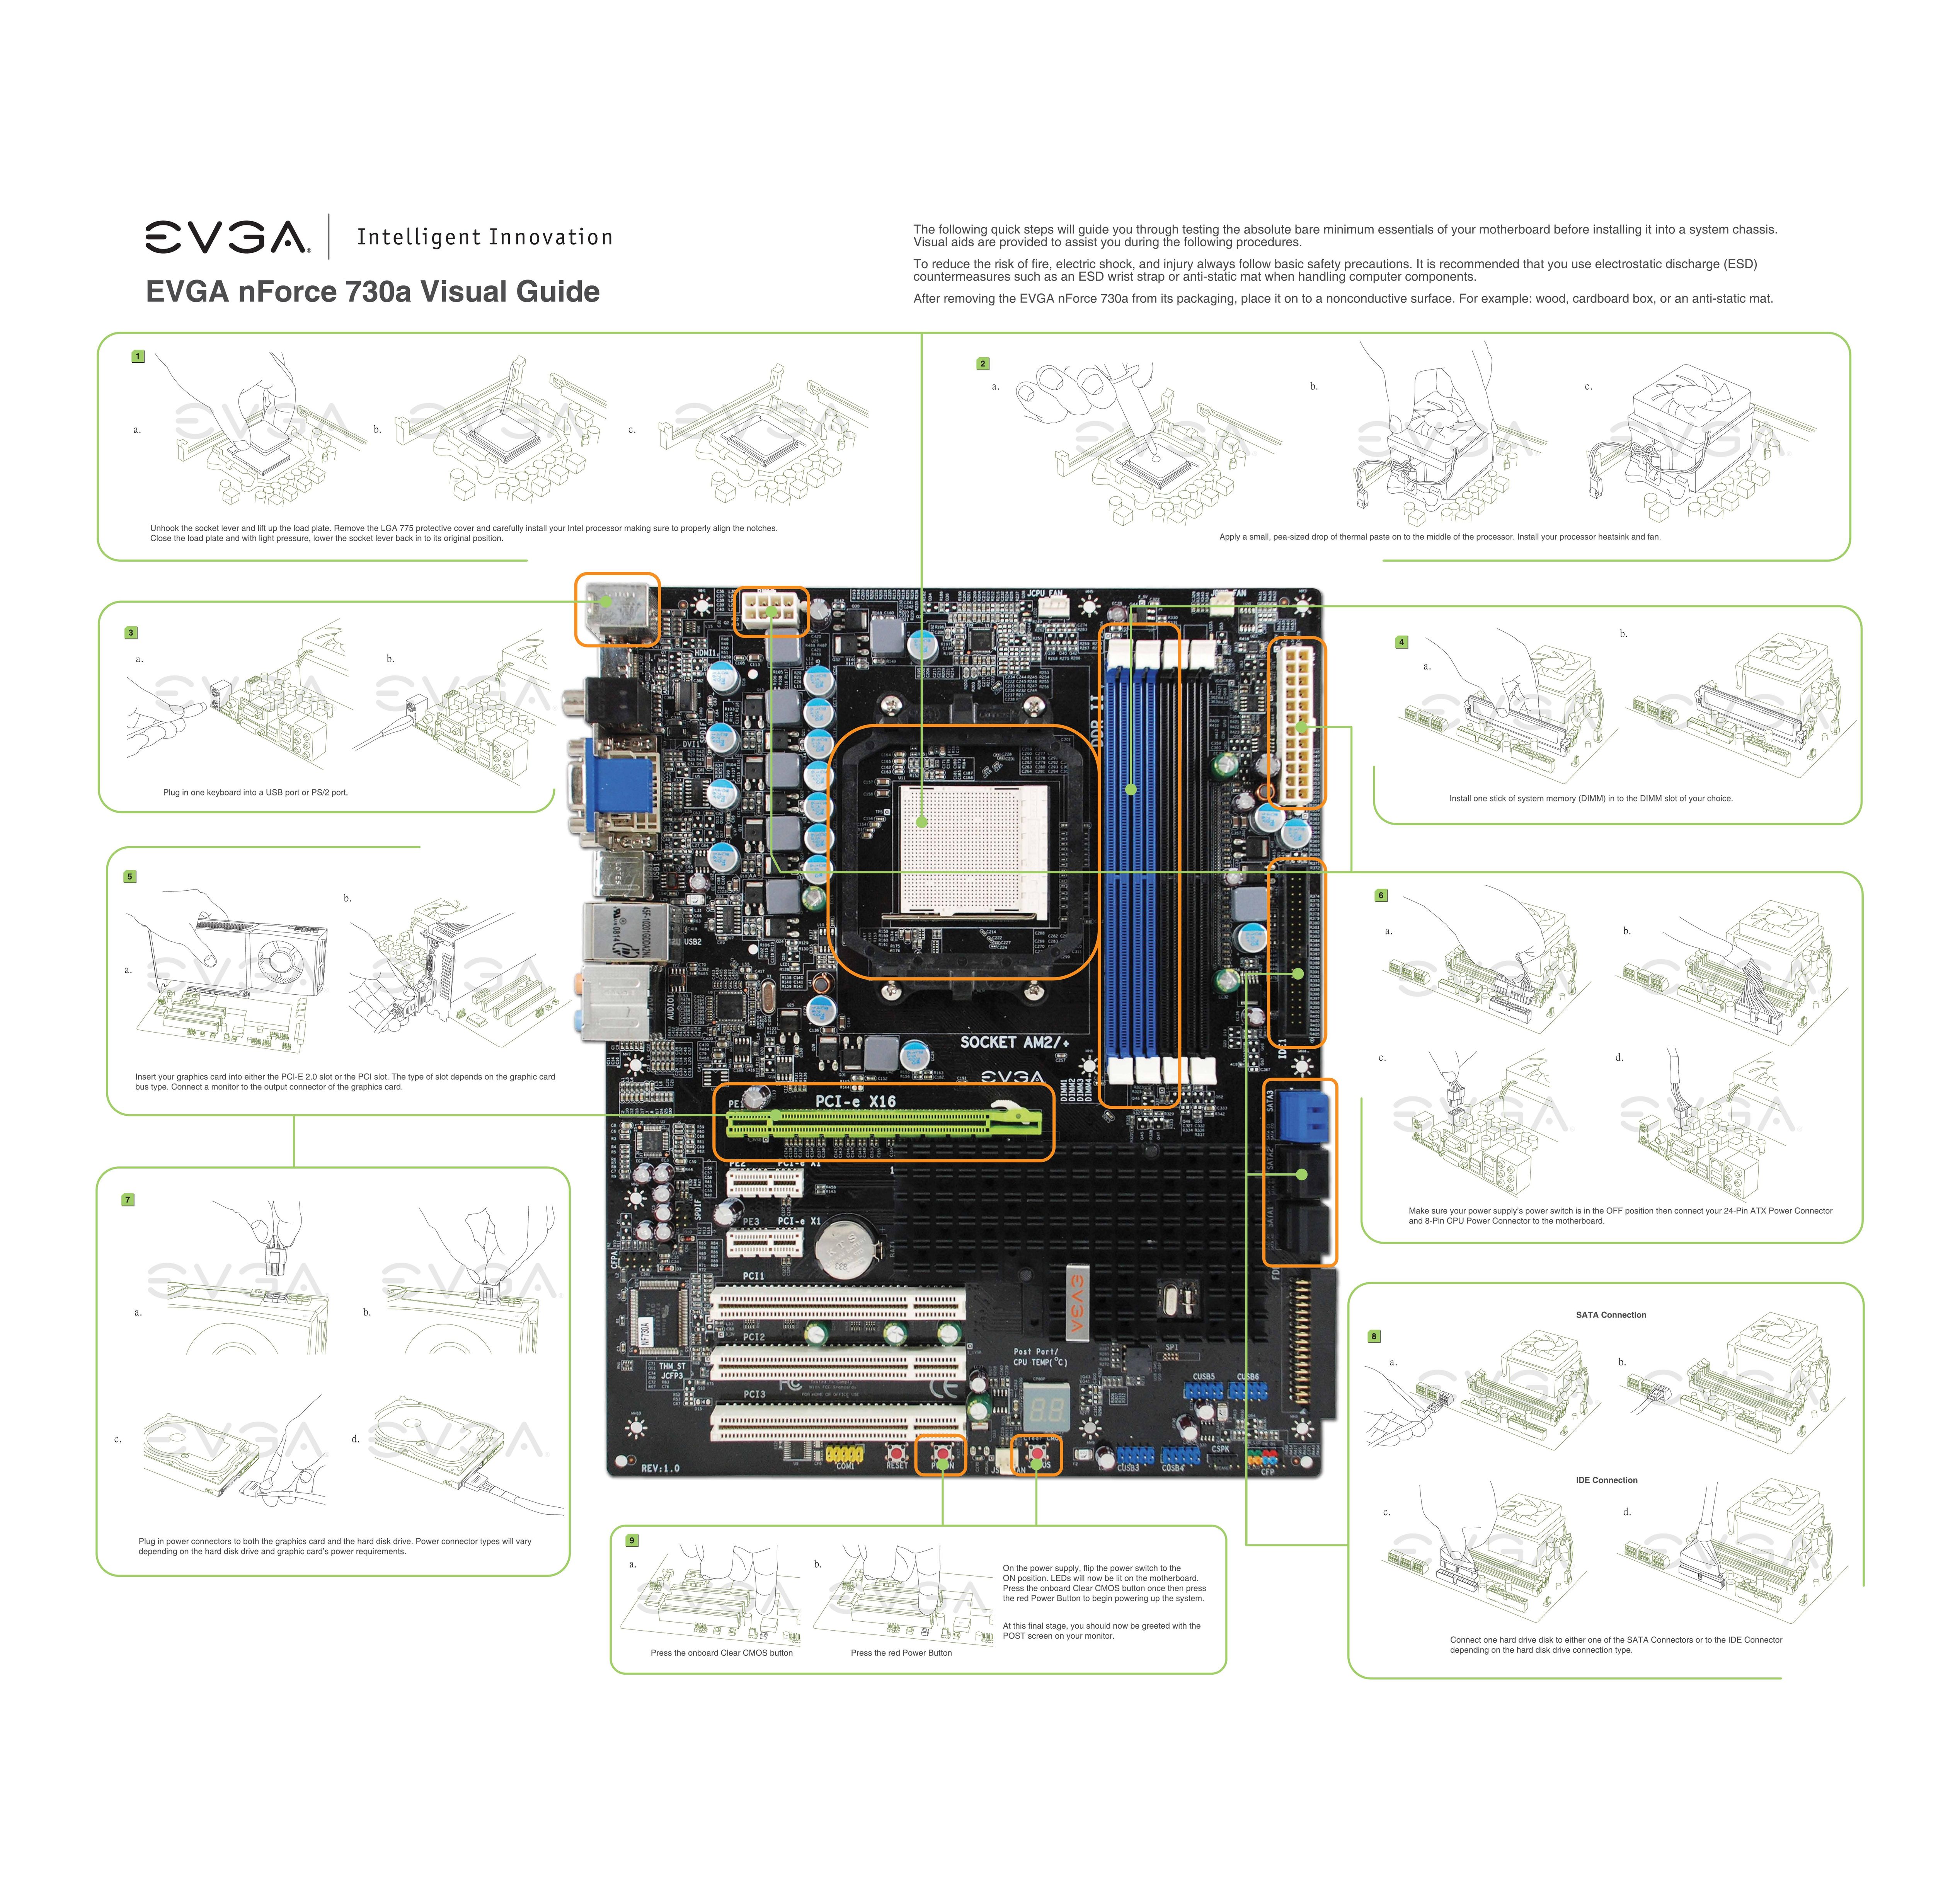 EVGA 730a Computer Hardware User Manual